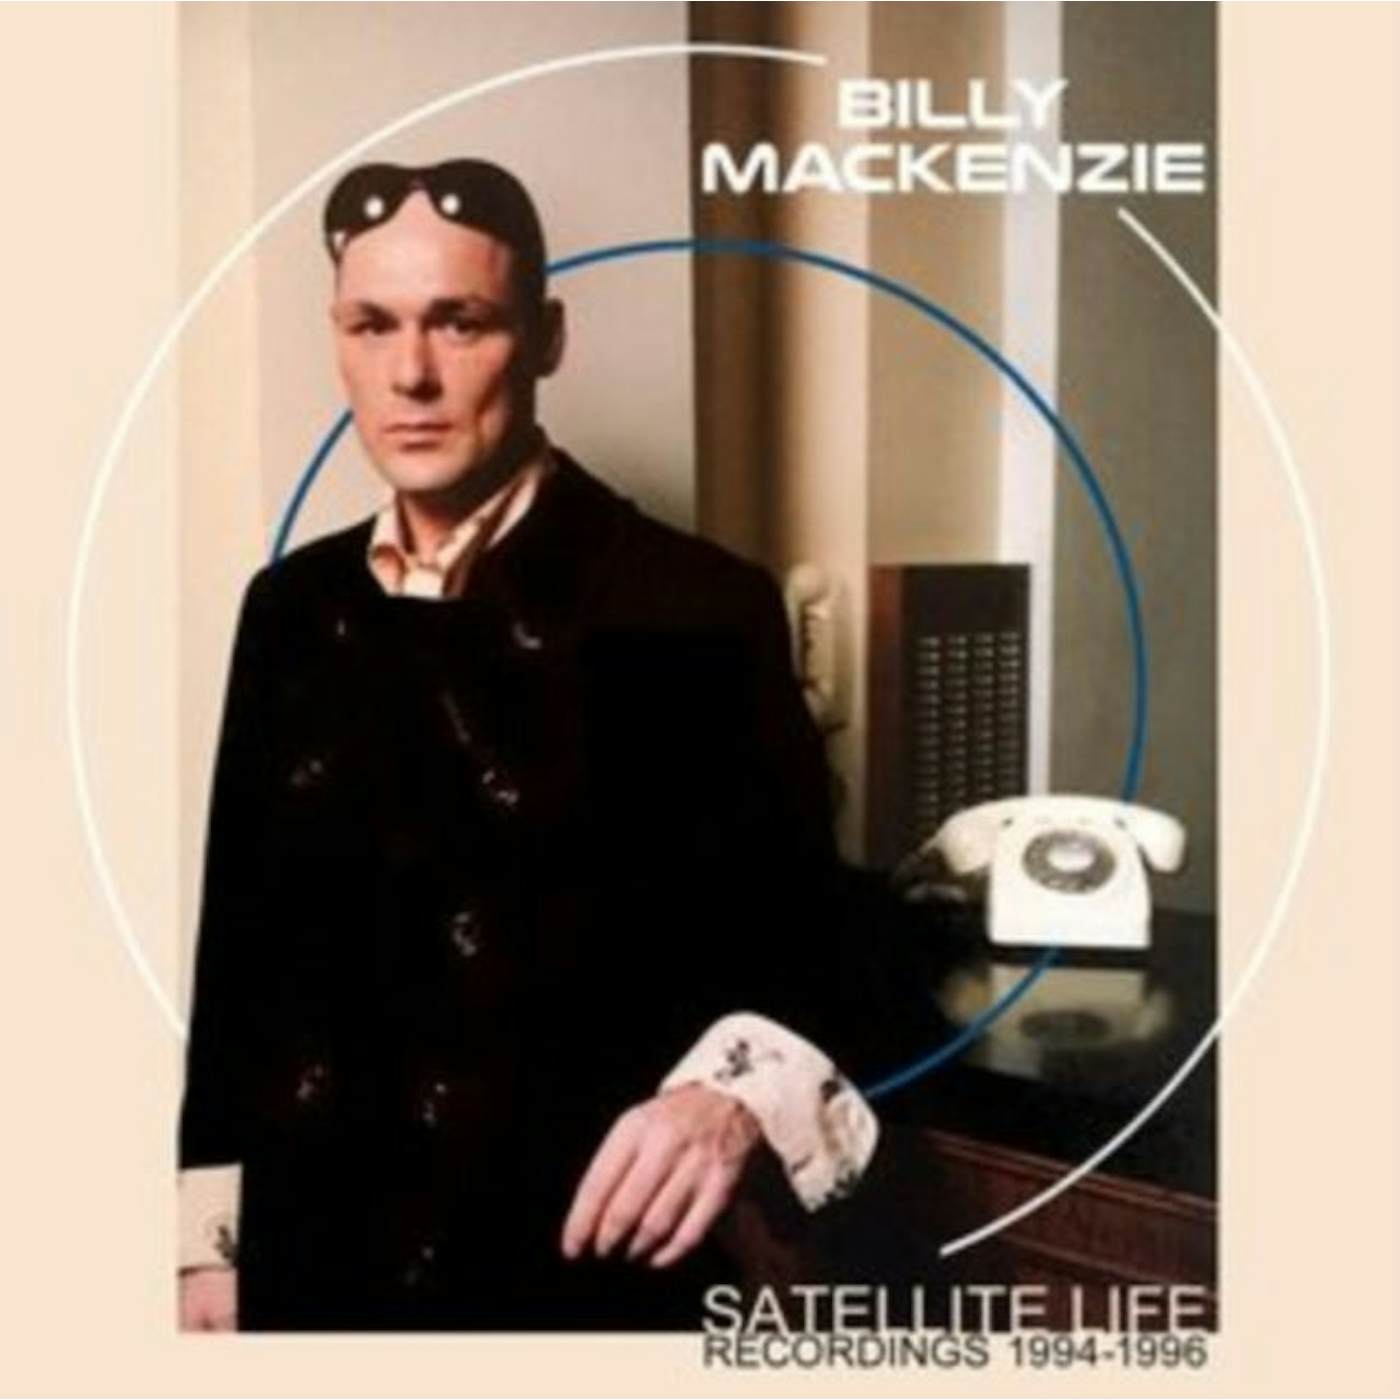 Billy Mackenzie CD - Satellite Life: Recordings 19 94-19 96